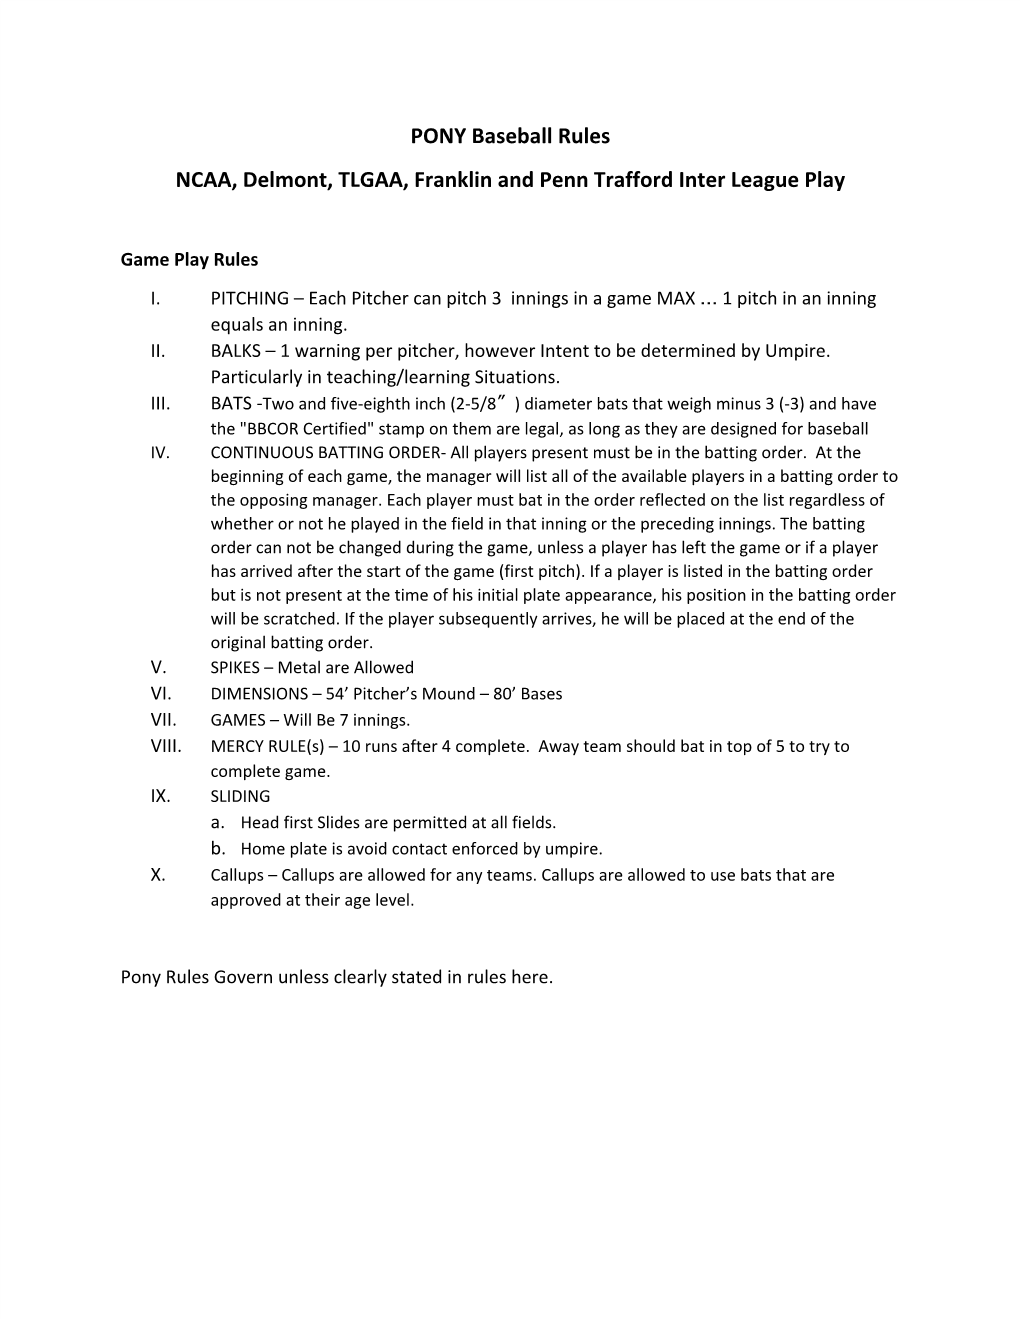 PONY Baseball Rules NCAA, Delmont, TLGAA, Franklin and Penn Trafford Inter League Play